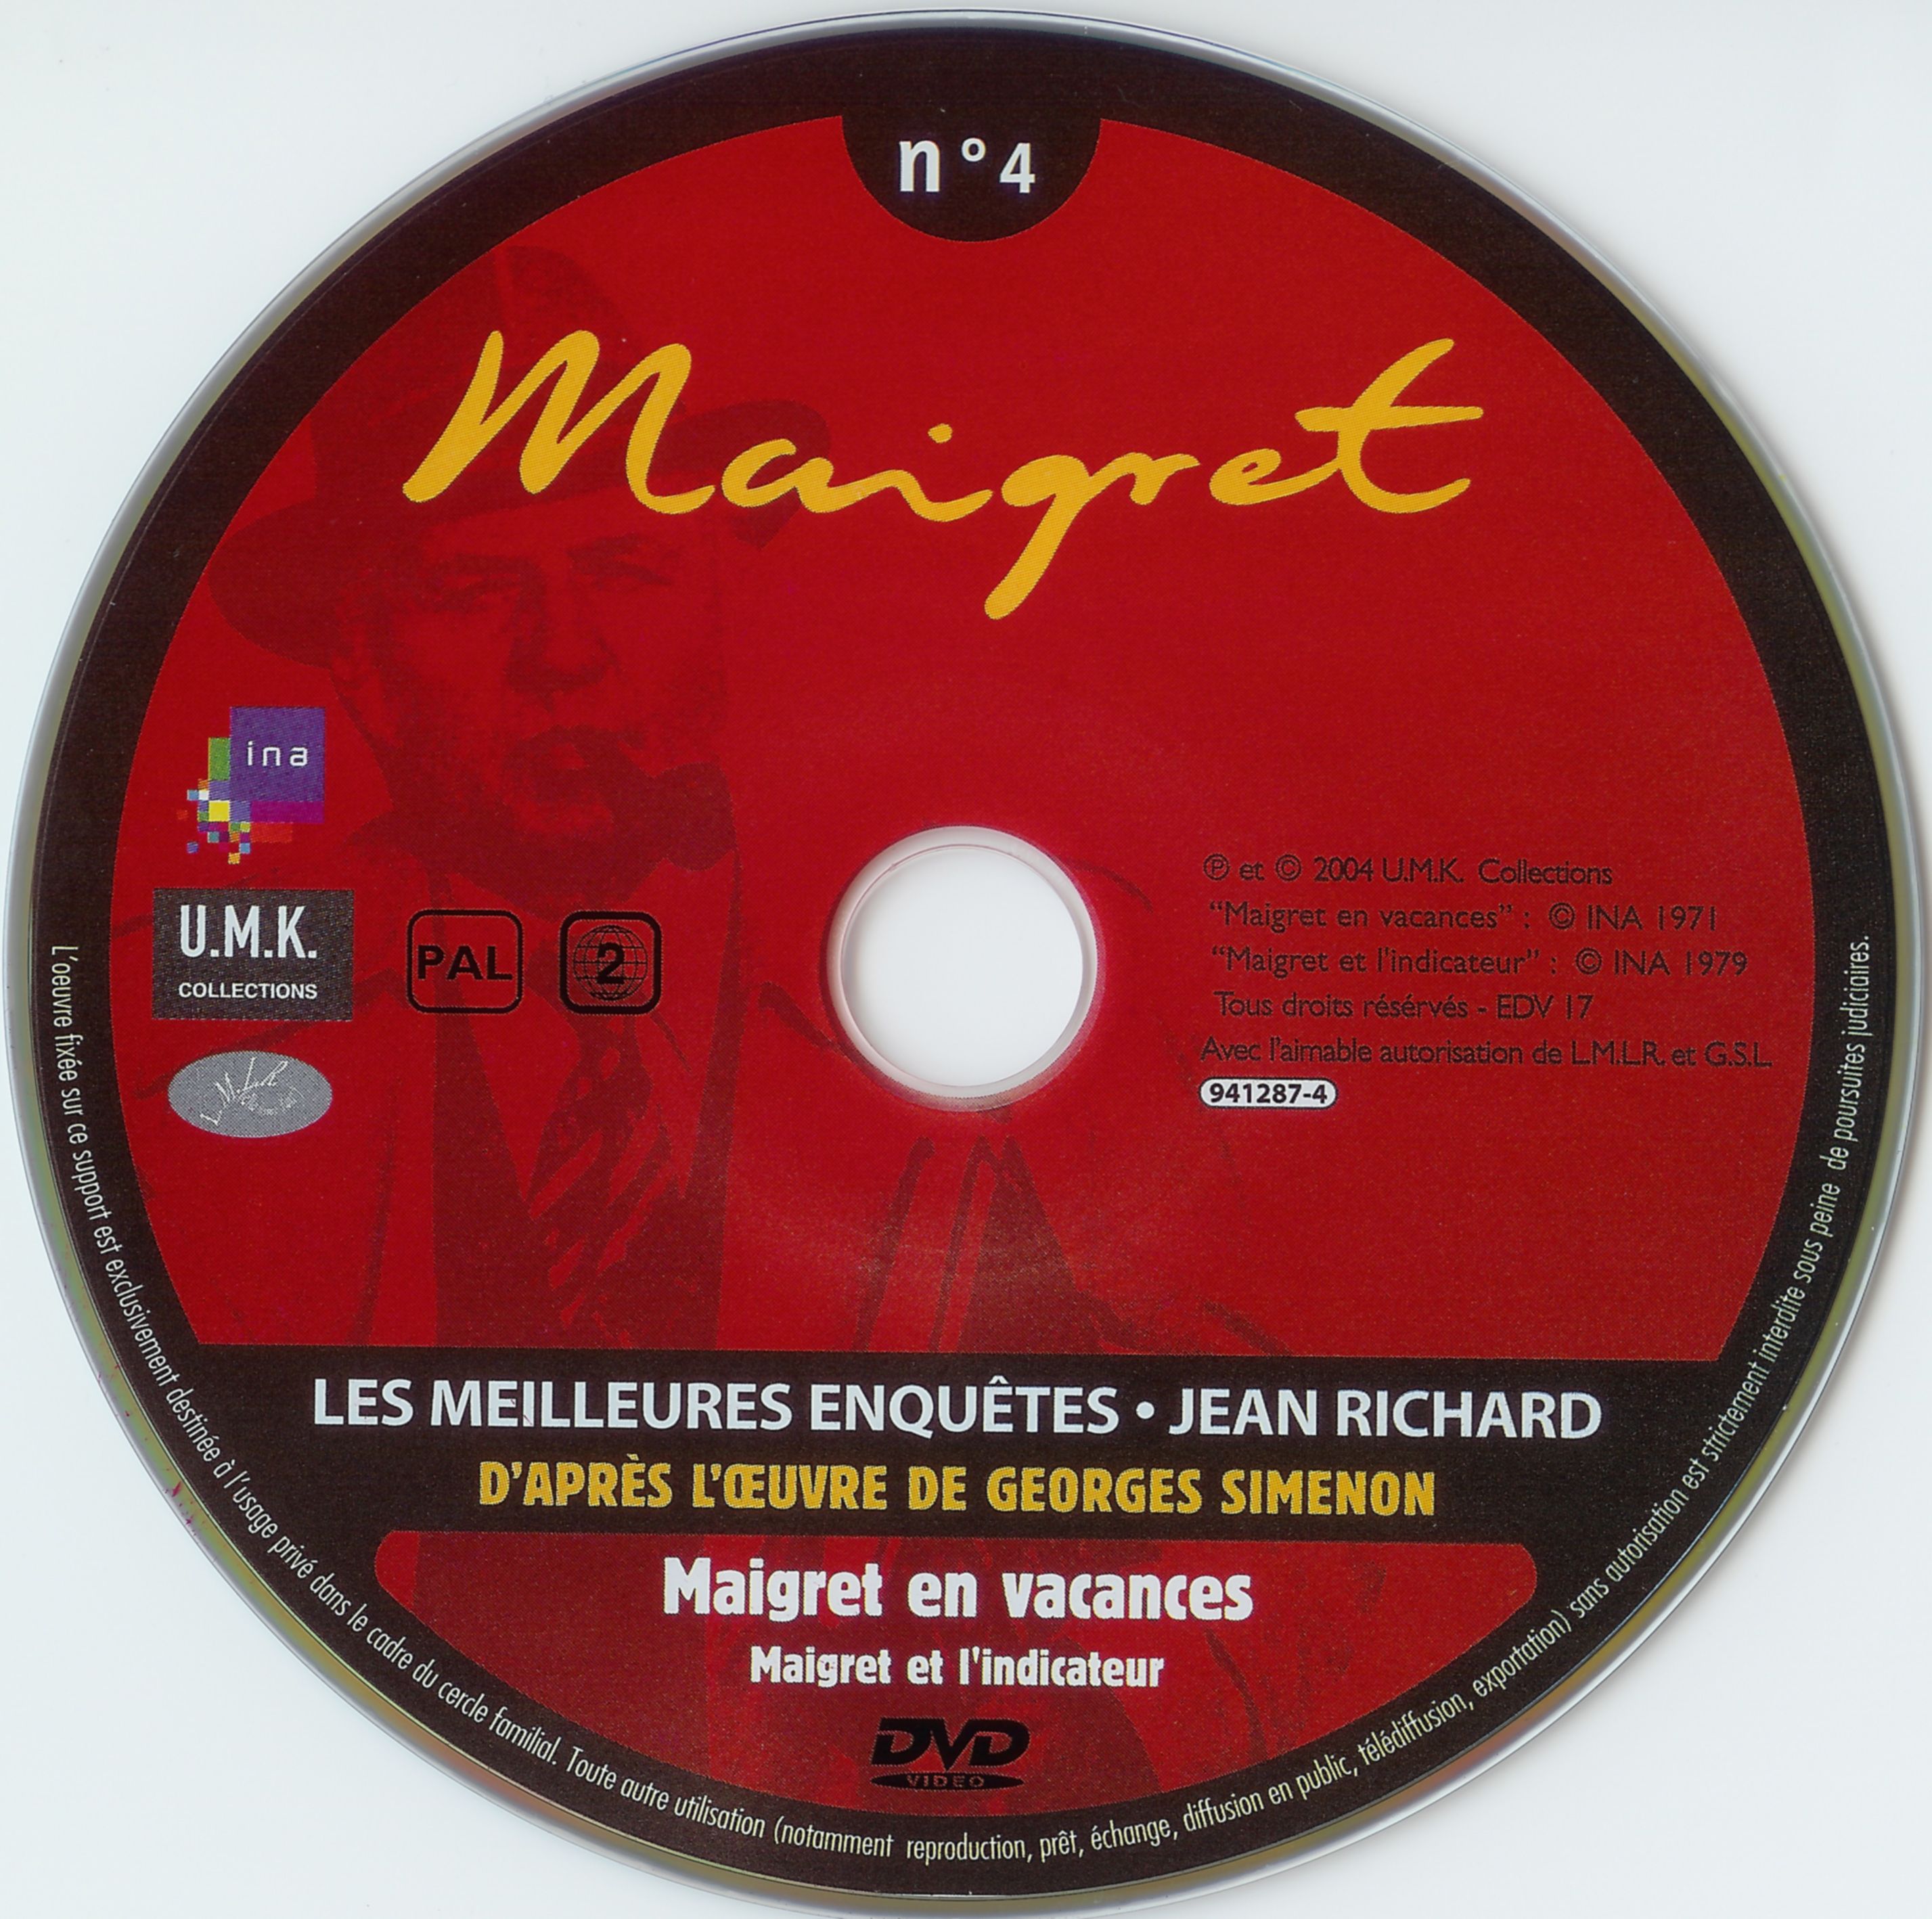 Maigret (Jean Richard) vol 04